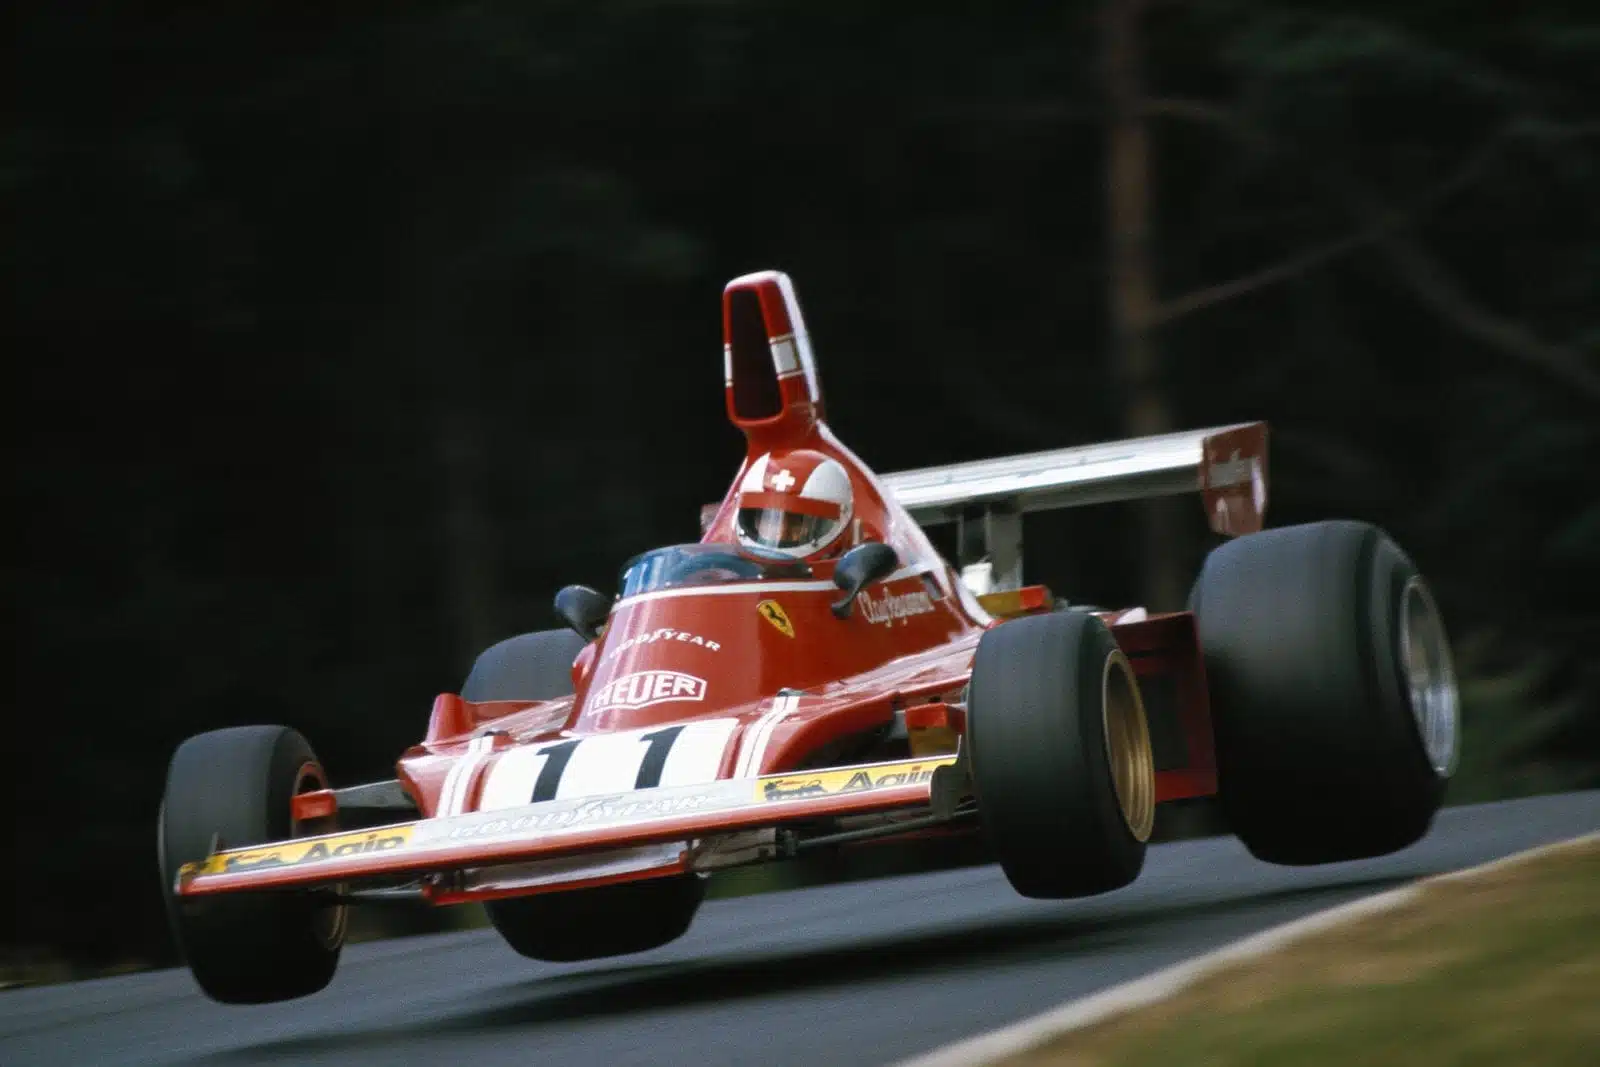 Clay Regazzoni's Ferrari takes flight at the 1974 German Grand Prix